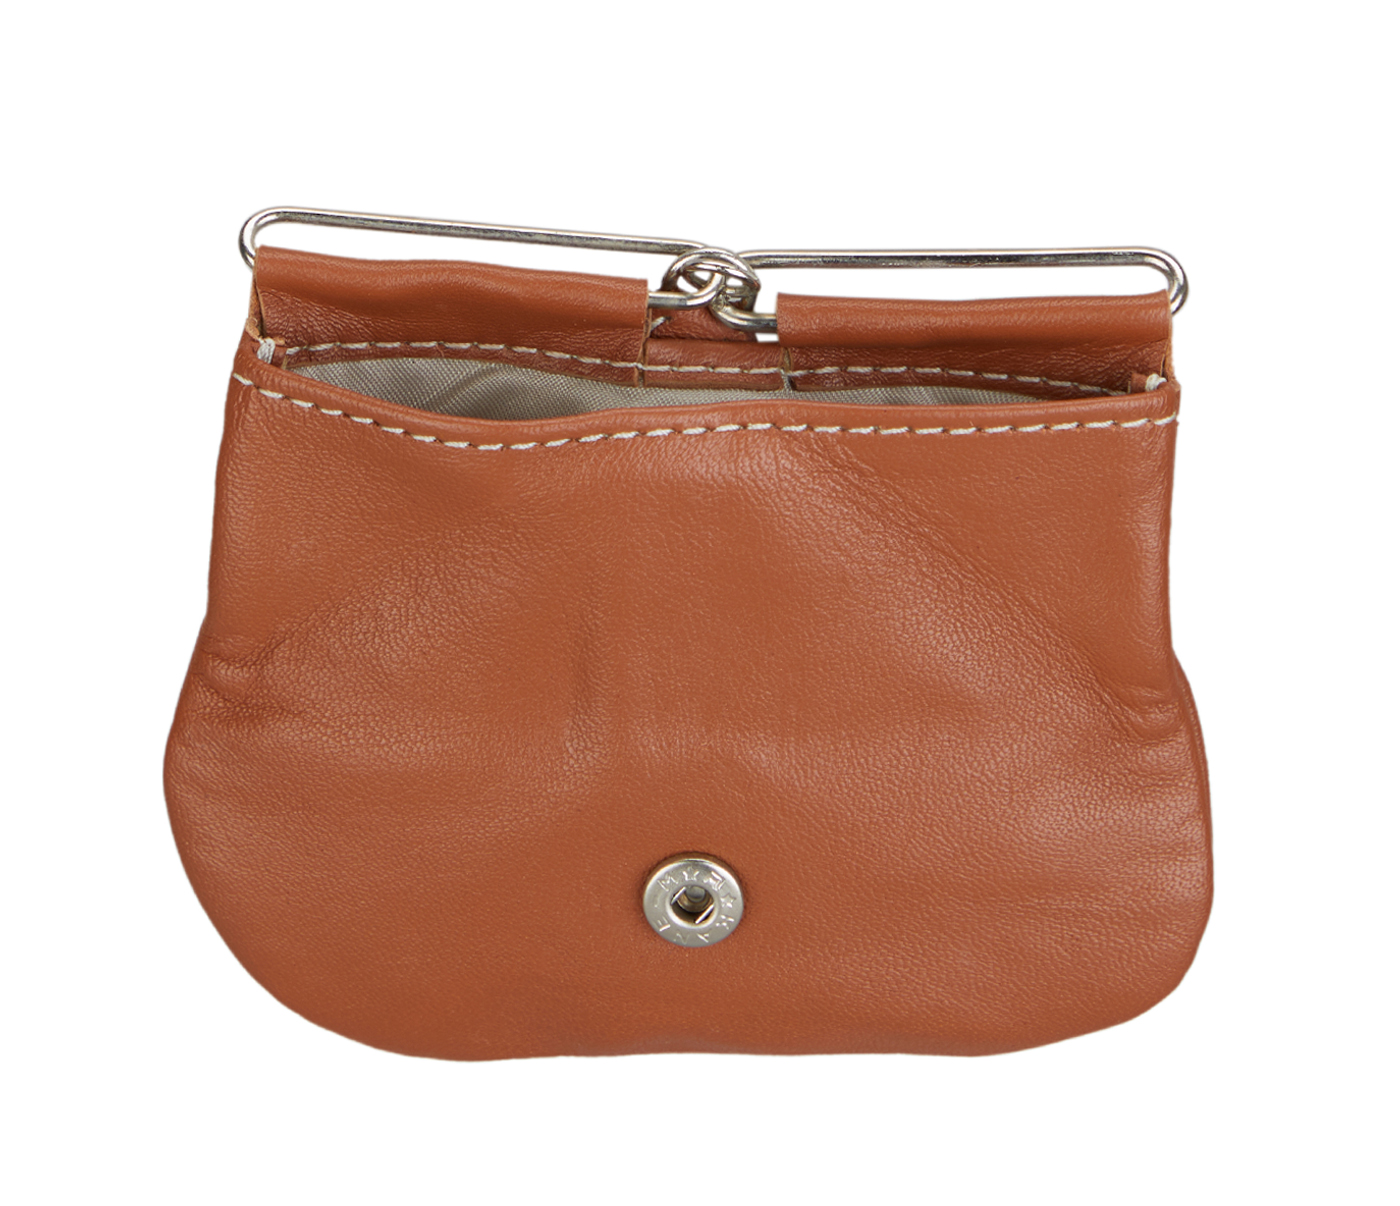 W100--Triangular shape mini coin purse in Genuine Leather - Tan